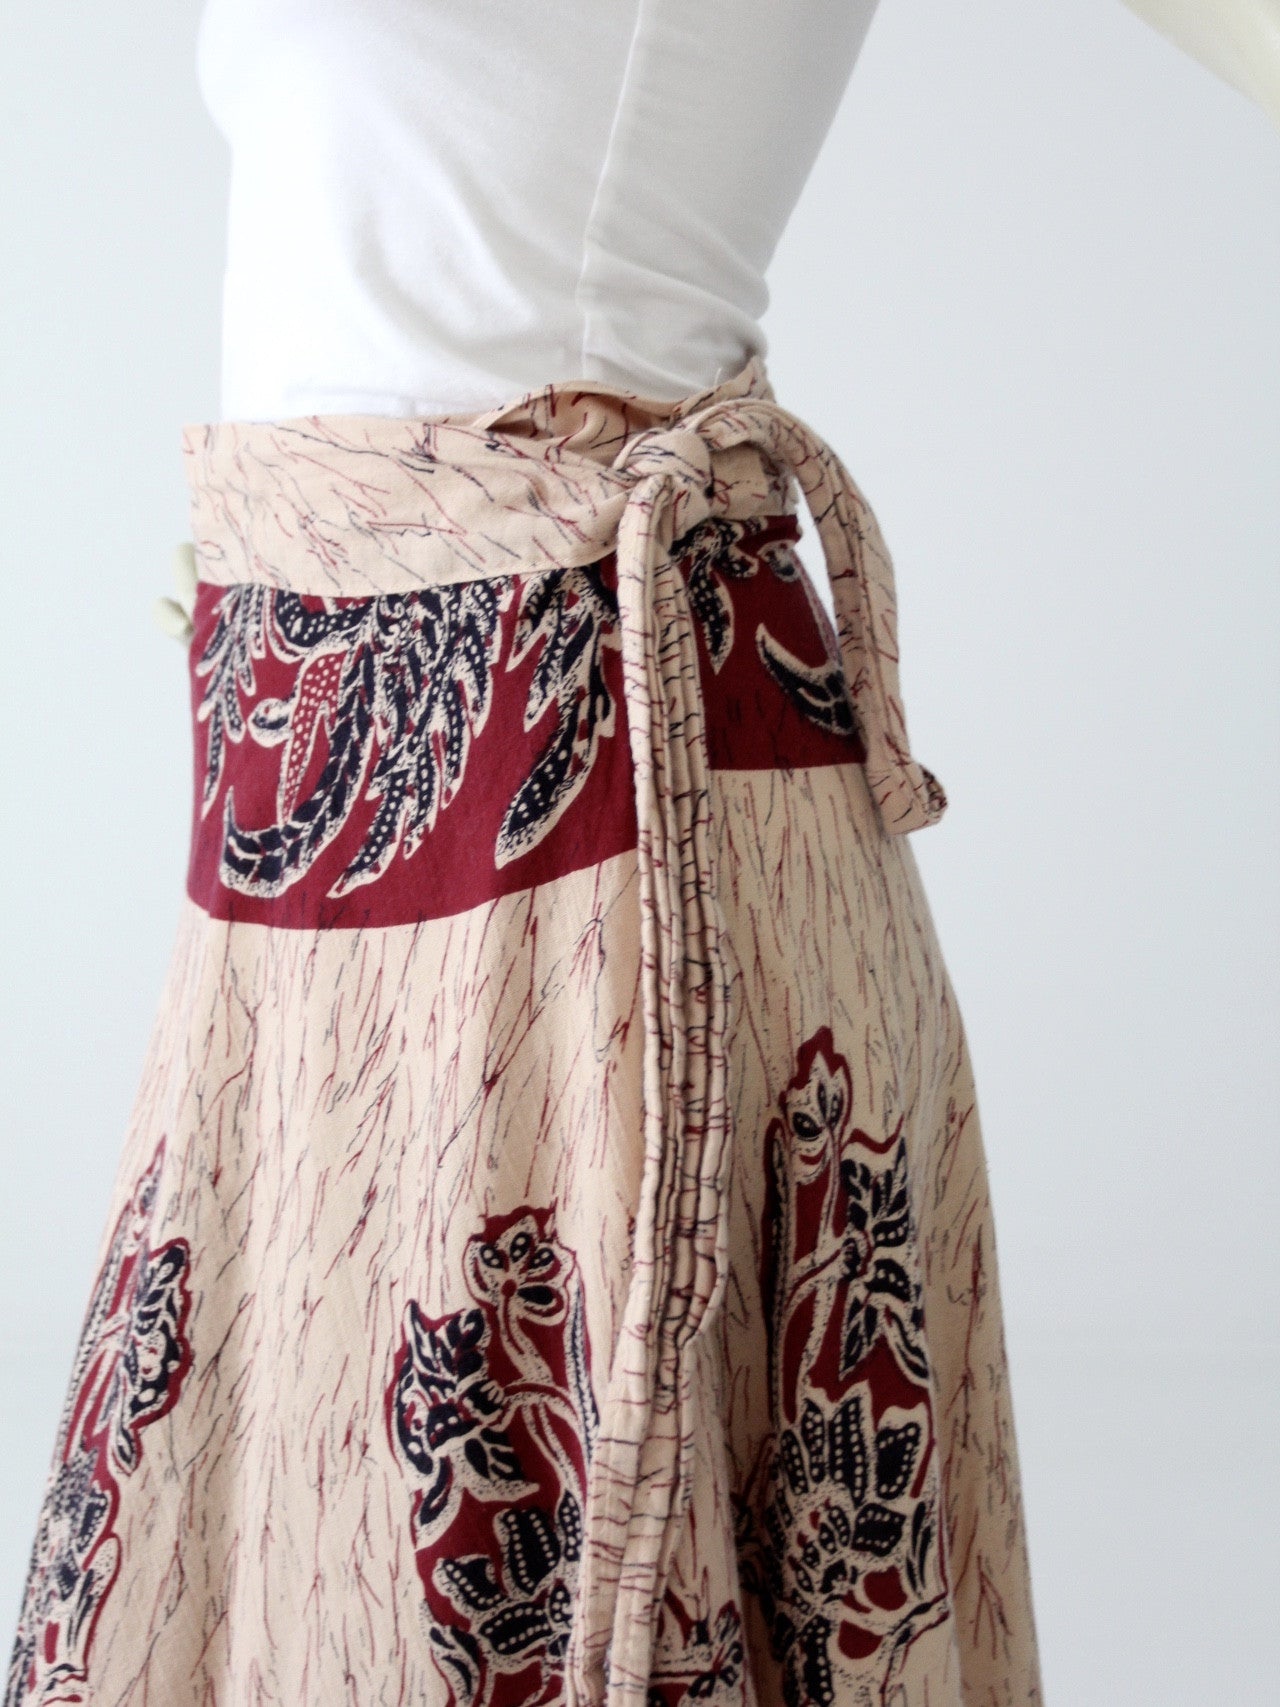 vintage 70s boho wrap skirt